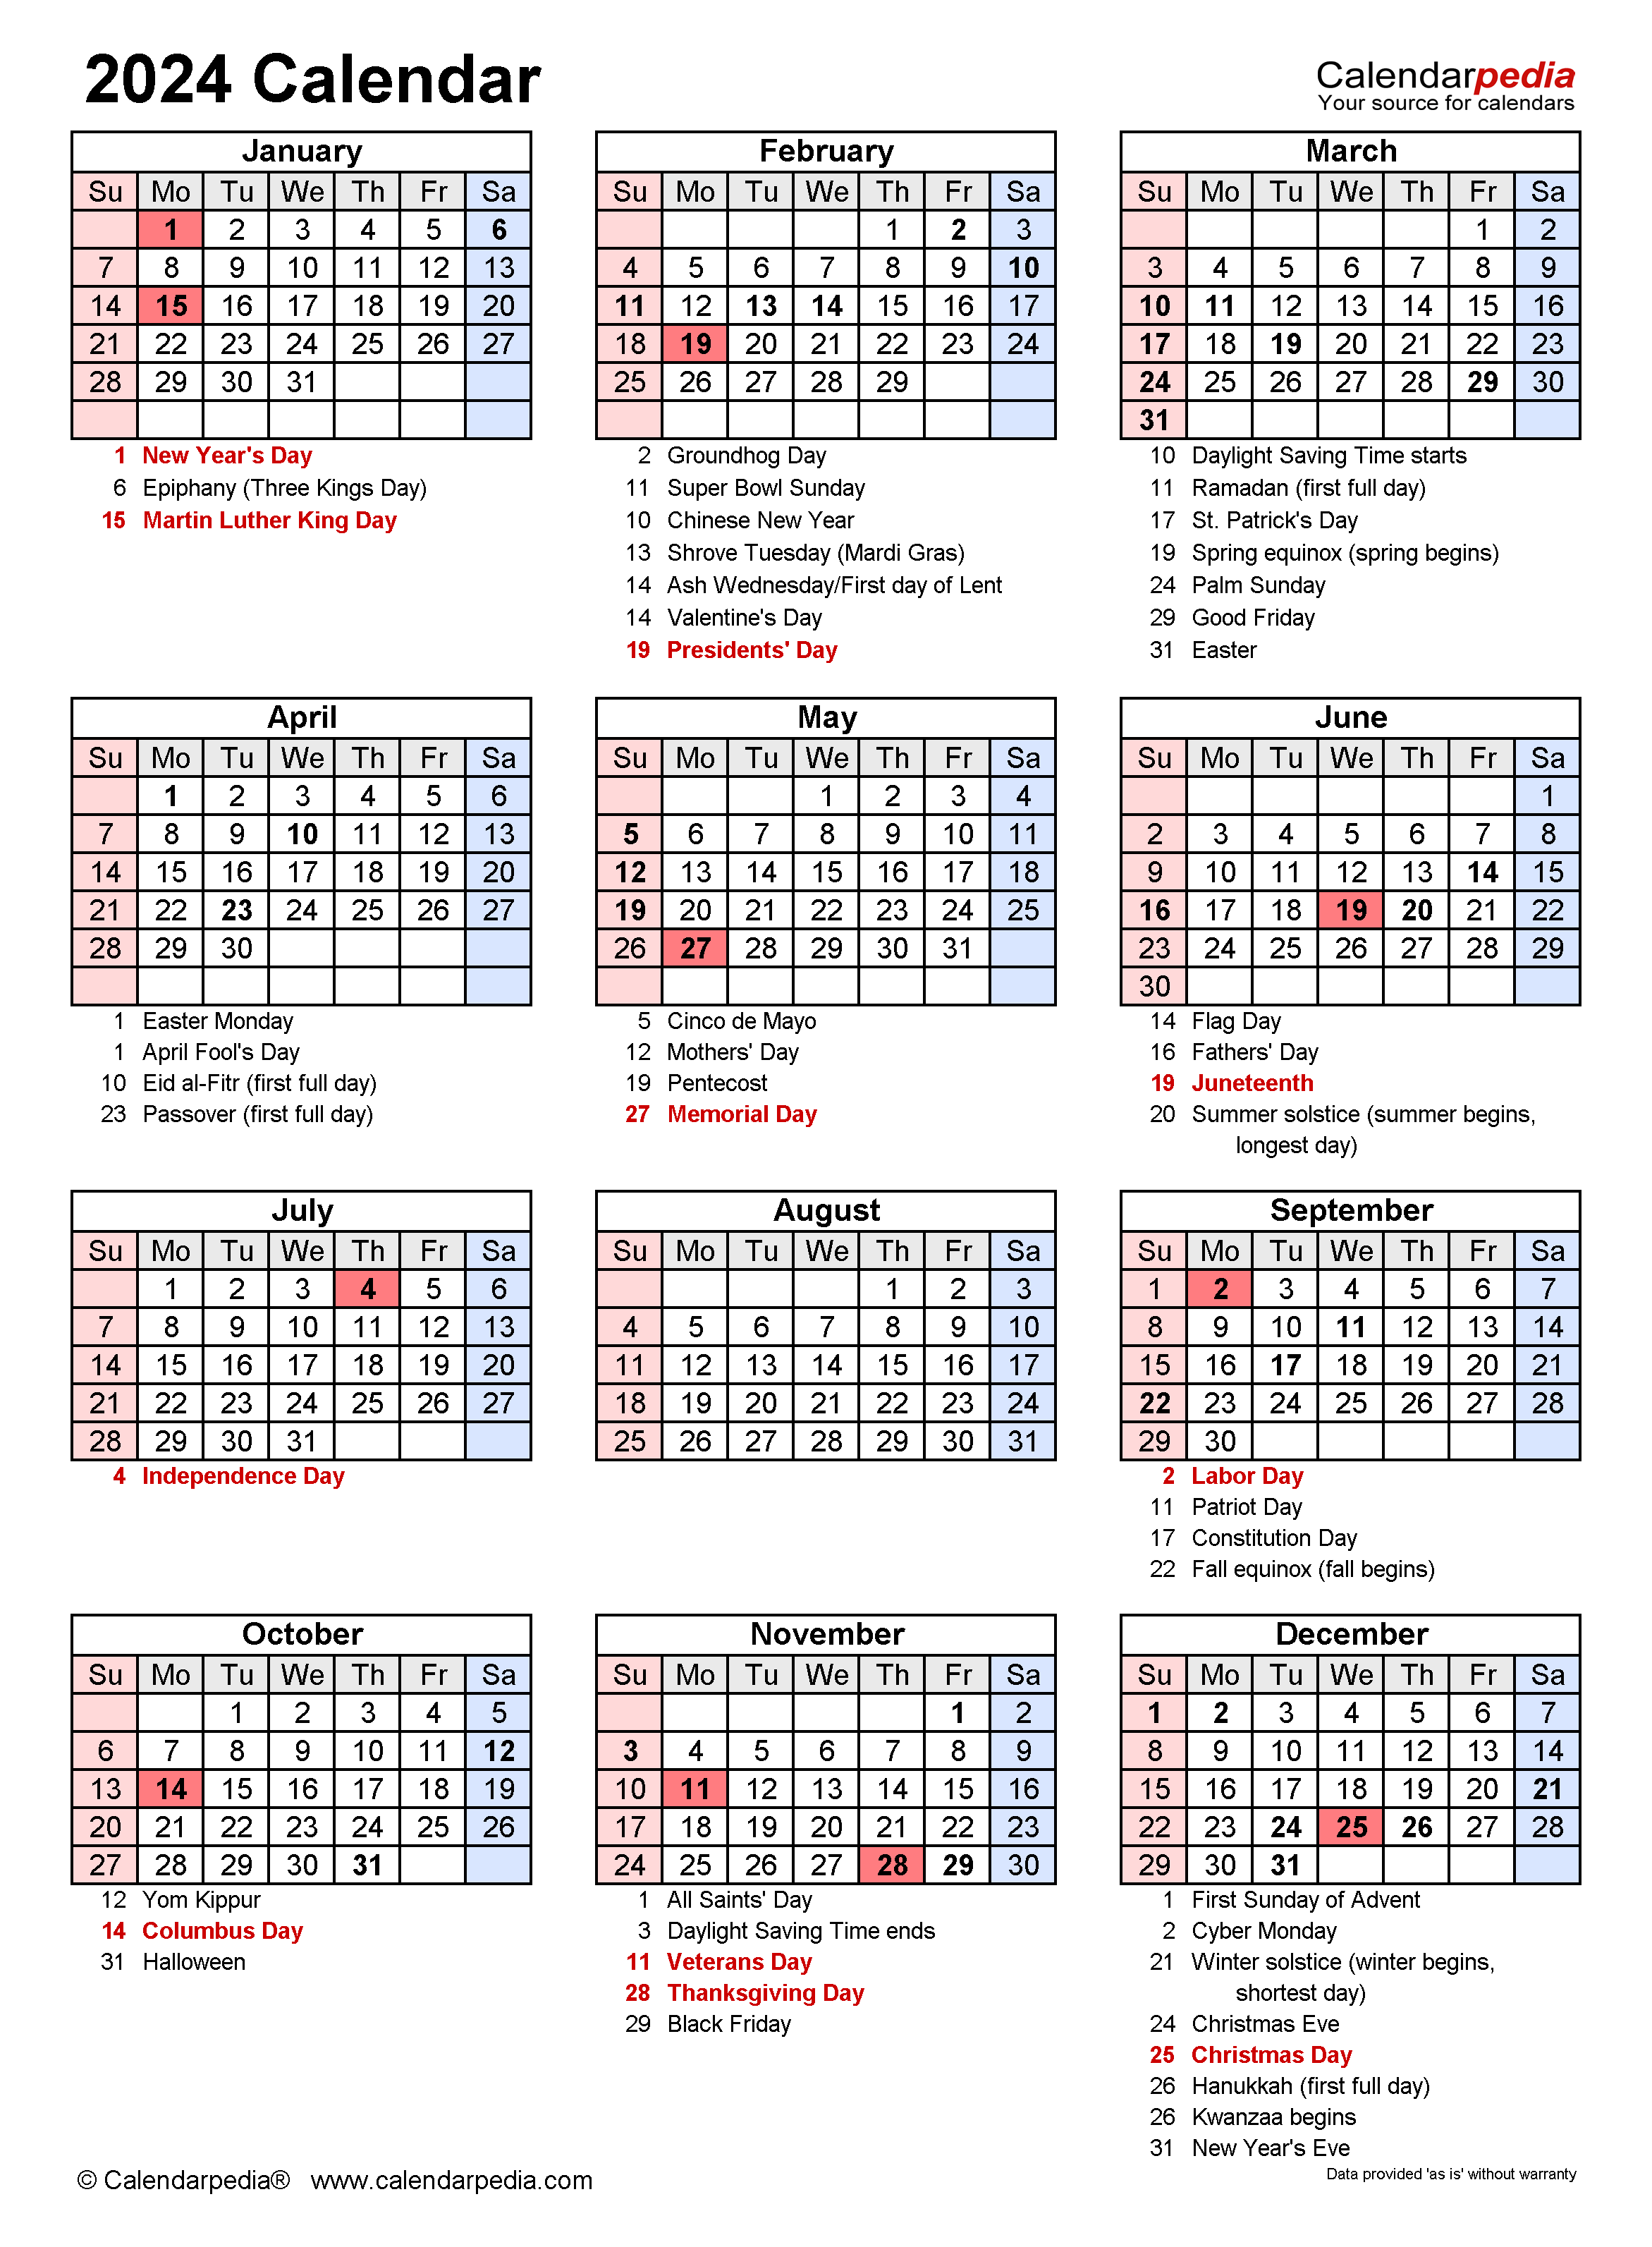 2024 Calendar Free Printable PDF Templates Calendarpedia - Free Printable 2024 Calendar With Us Holidays Foe Crafts